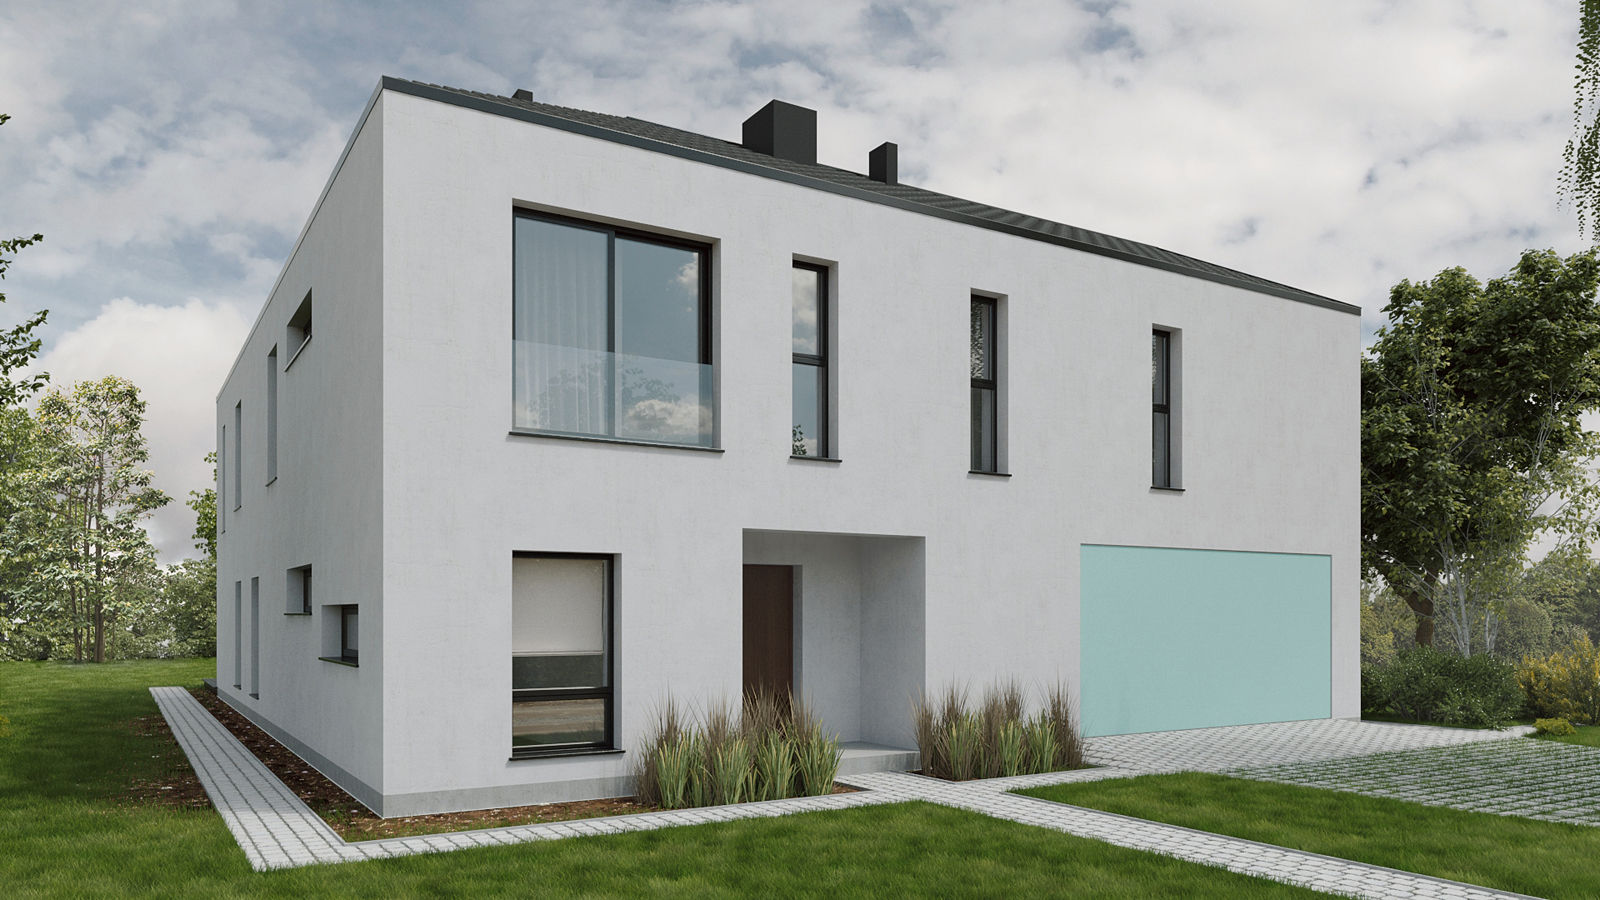 Easy-living house Marmur Studio house design